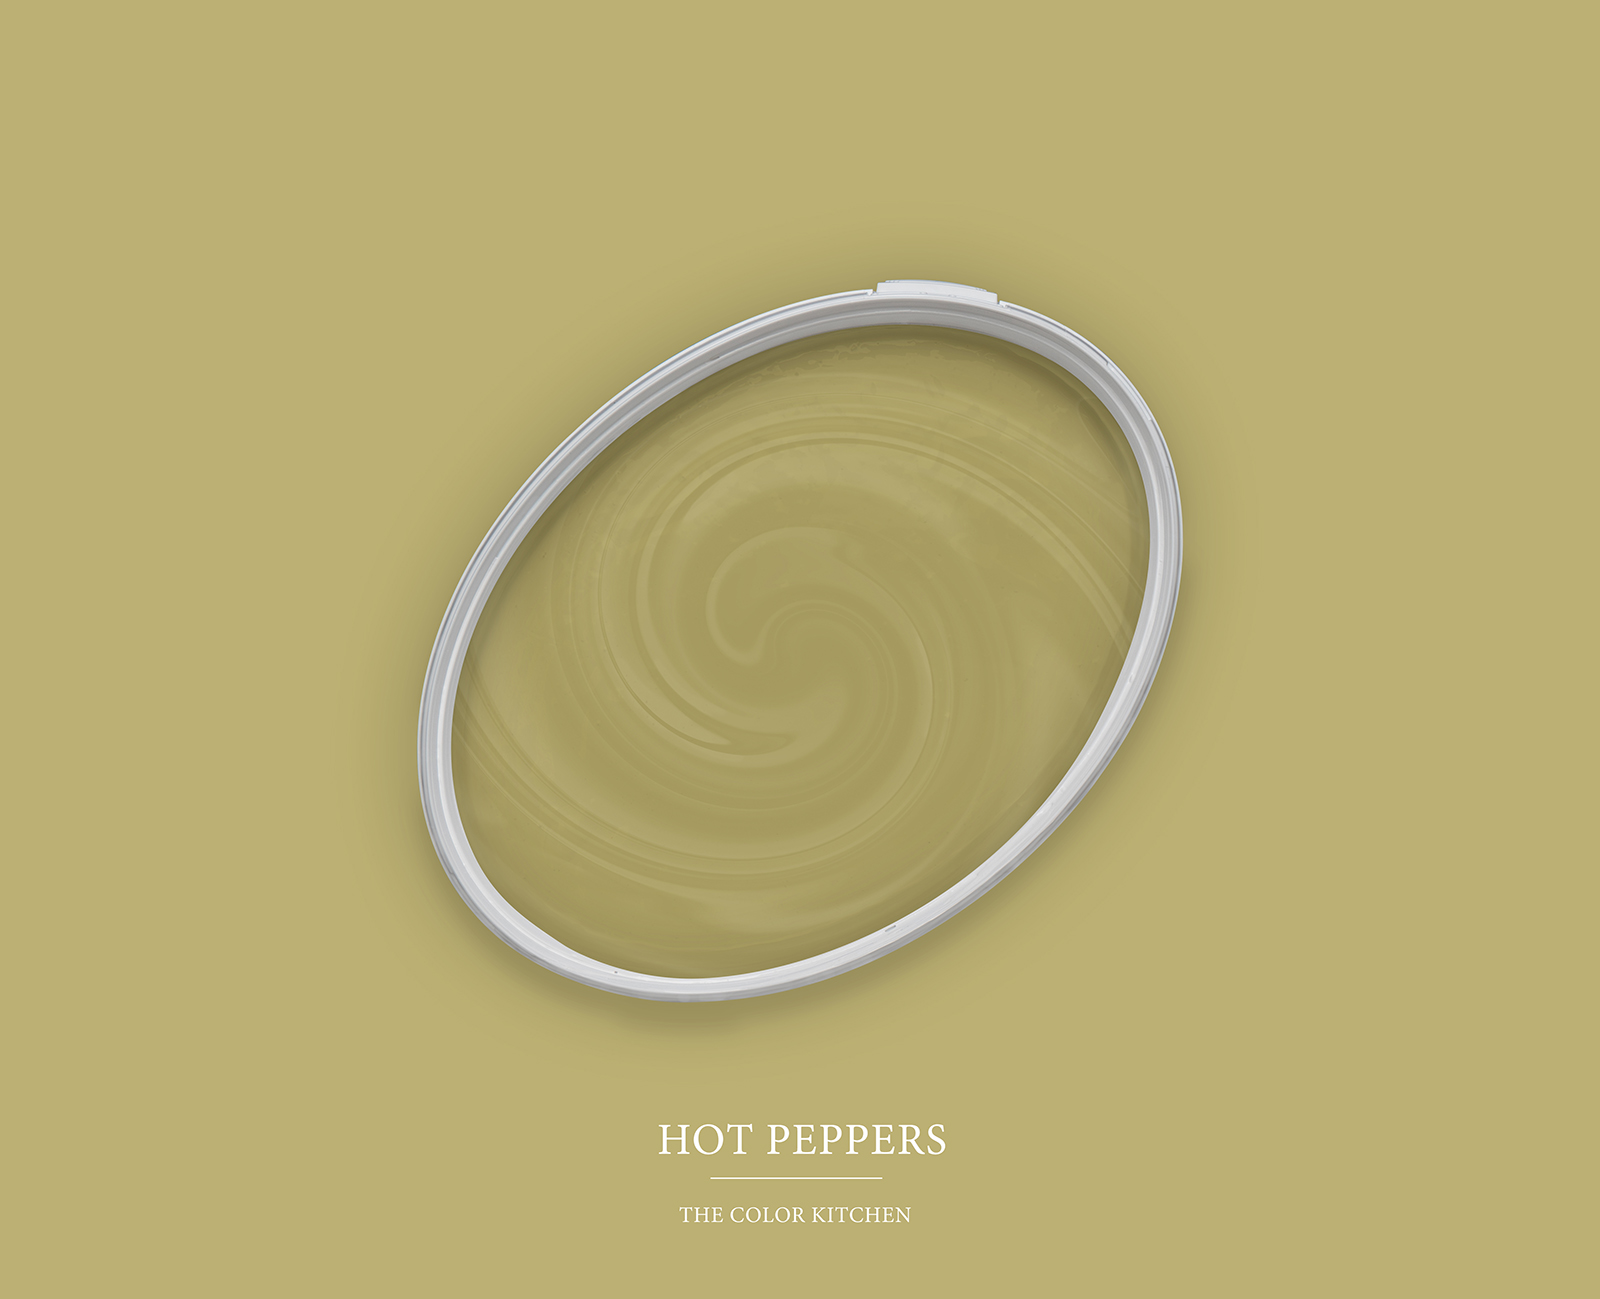         Wandfarbe in entspannendem Grün »Hot Peppers« TCK4011 – 2,5 Liter
    